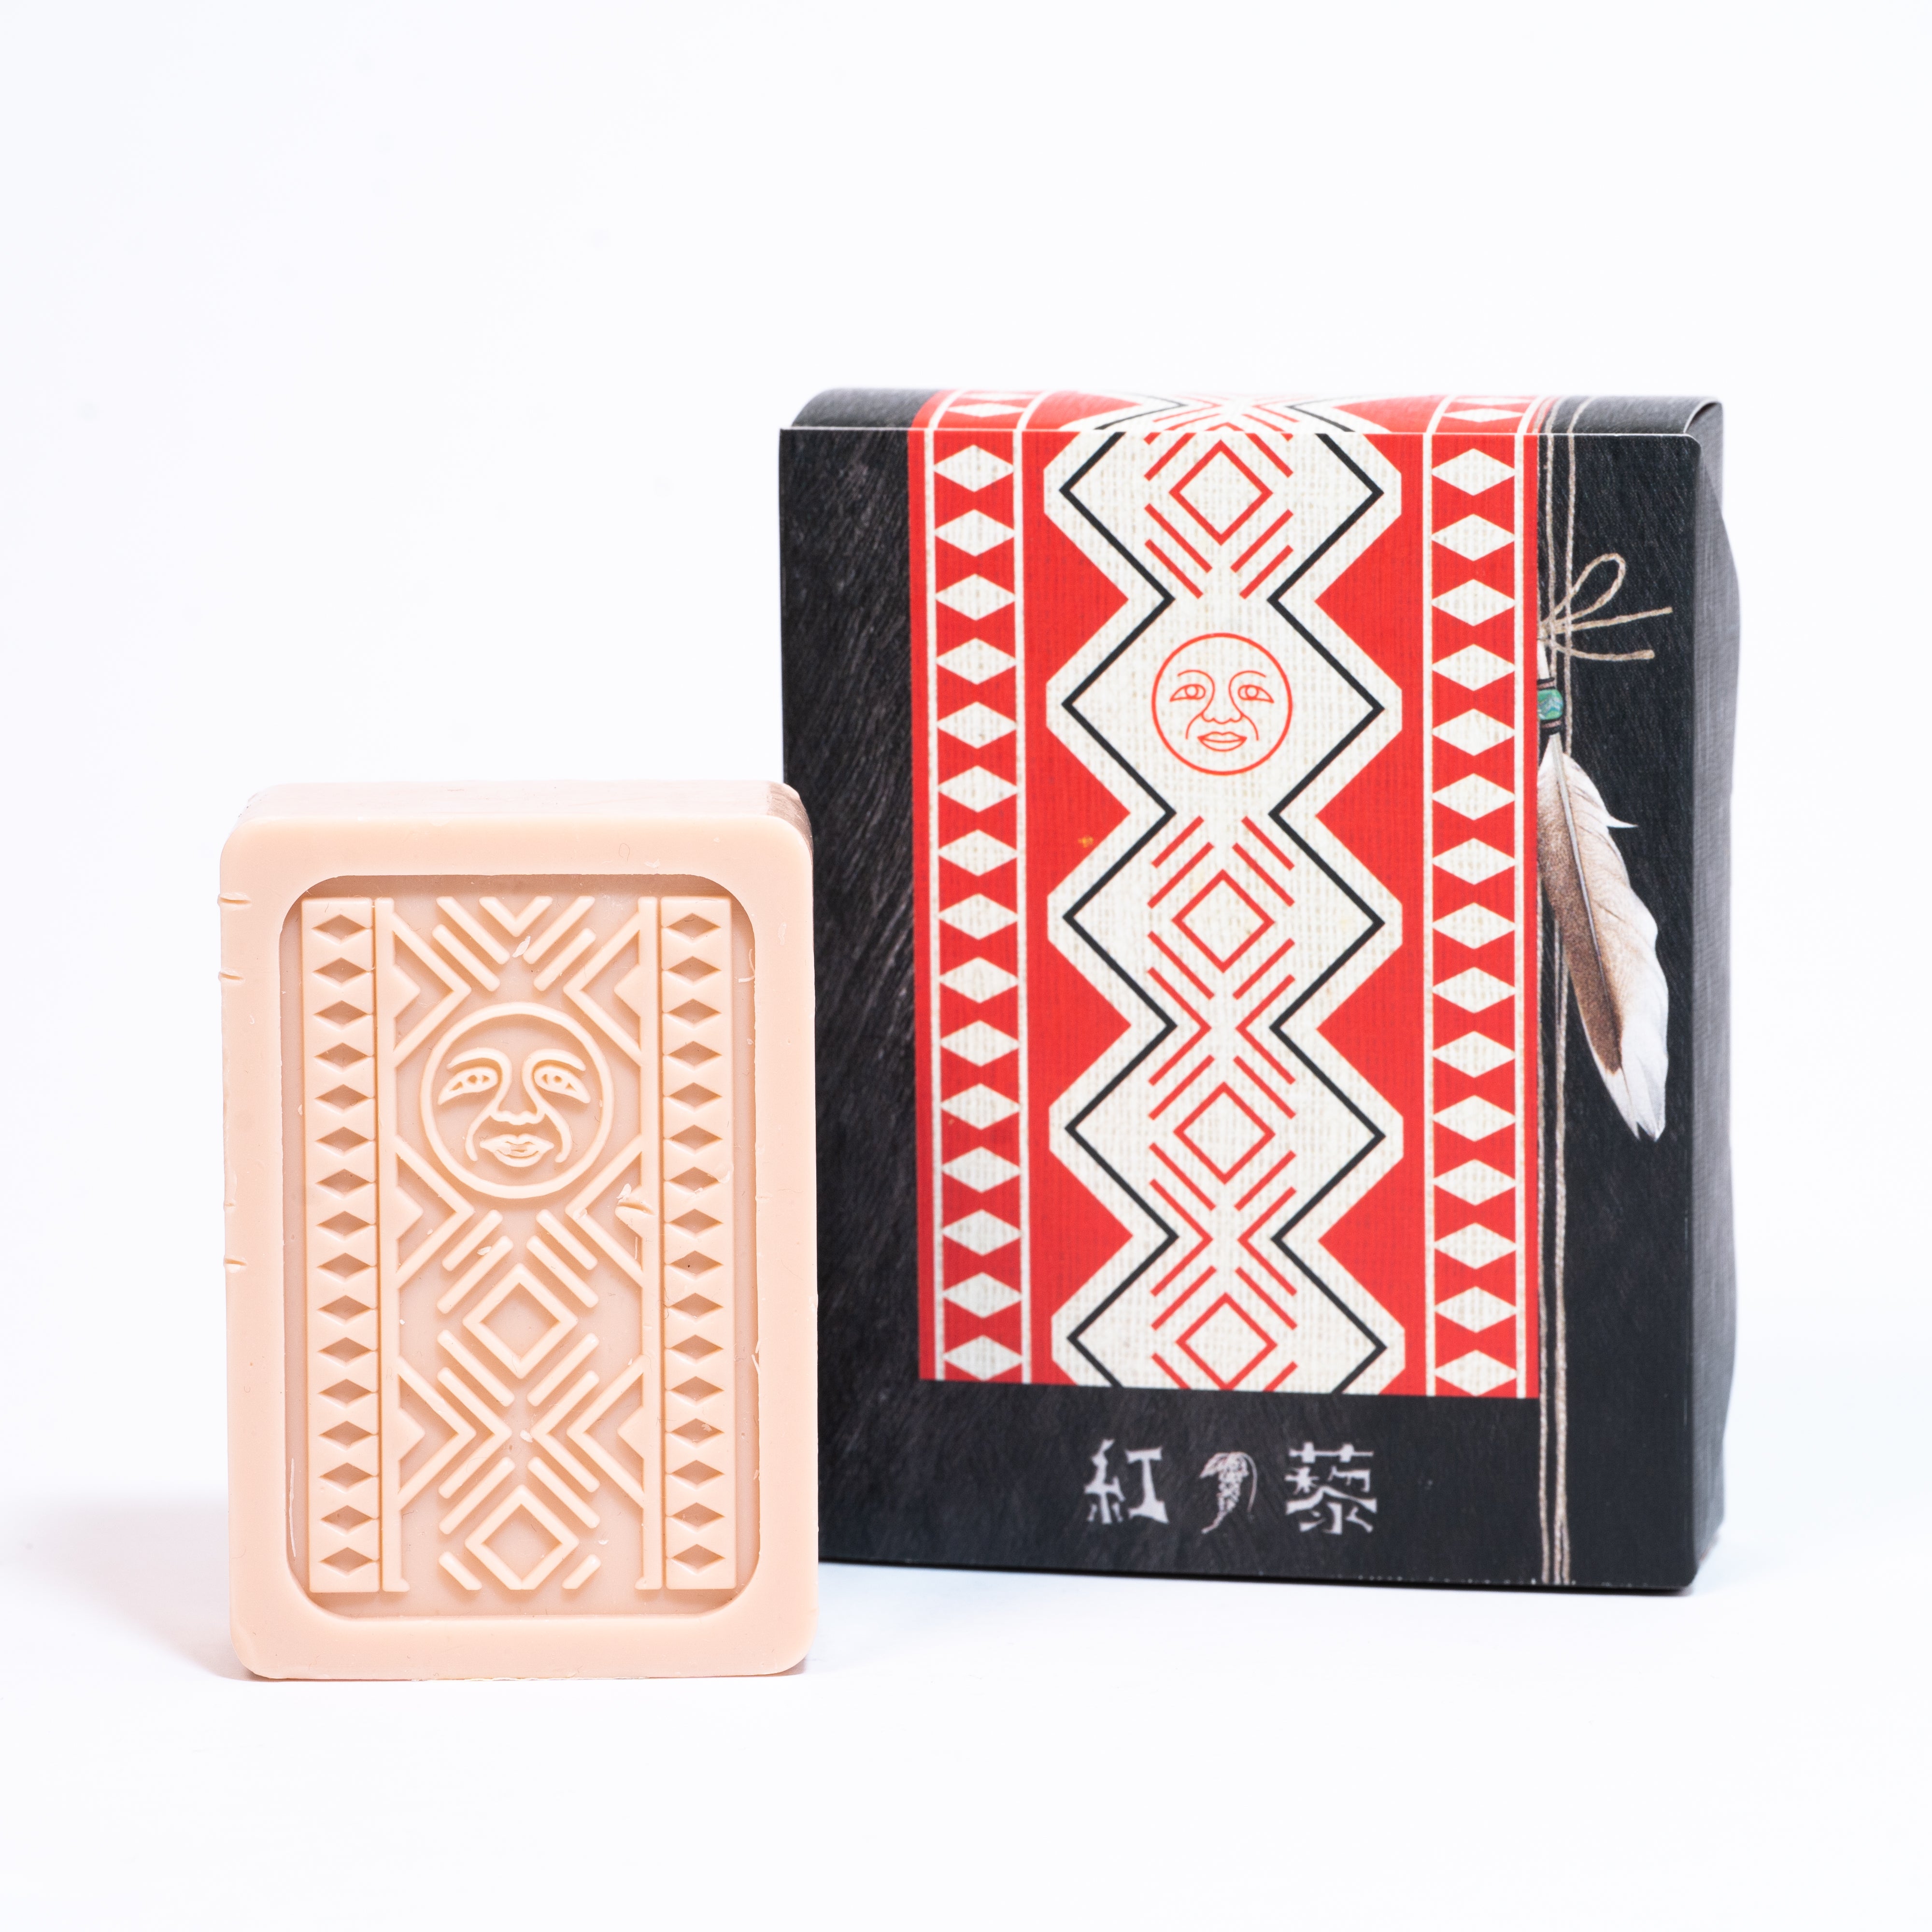 Dachun Soap - Taiwan Native Red Quinoa Body and Hand Soap